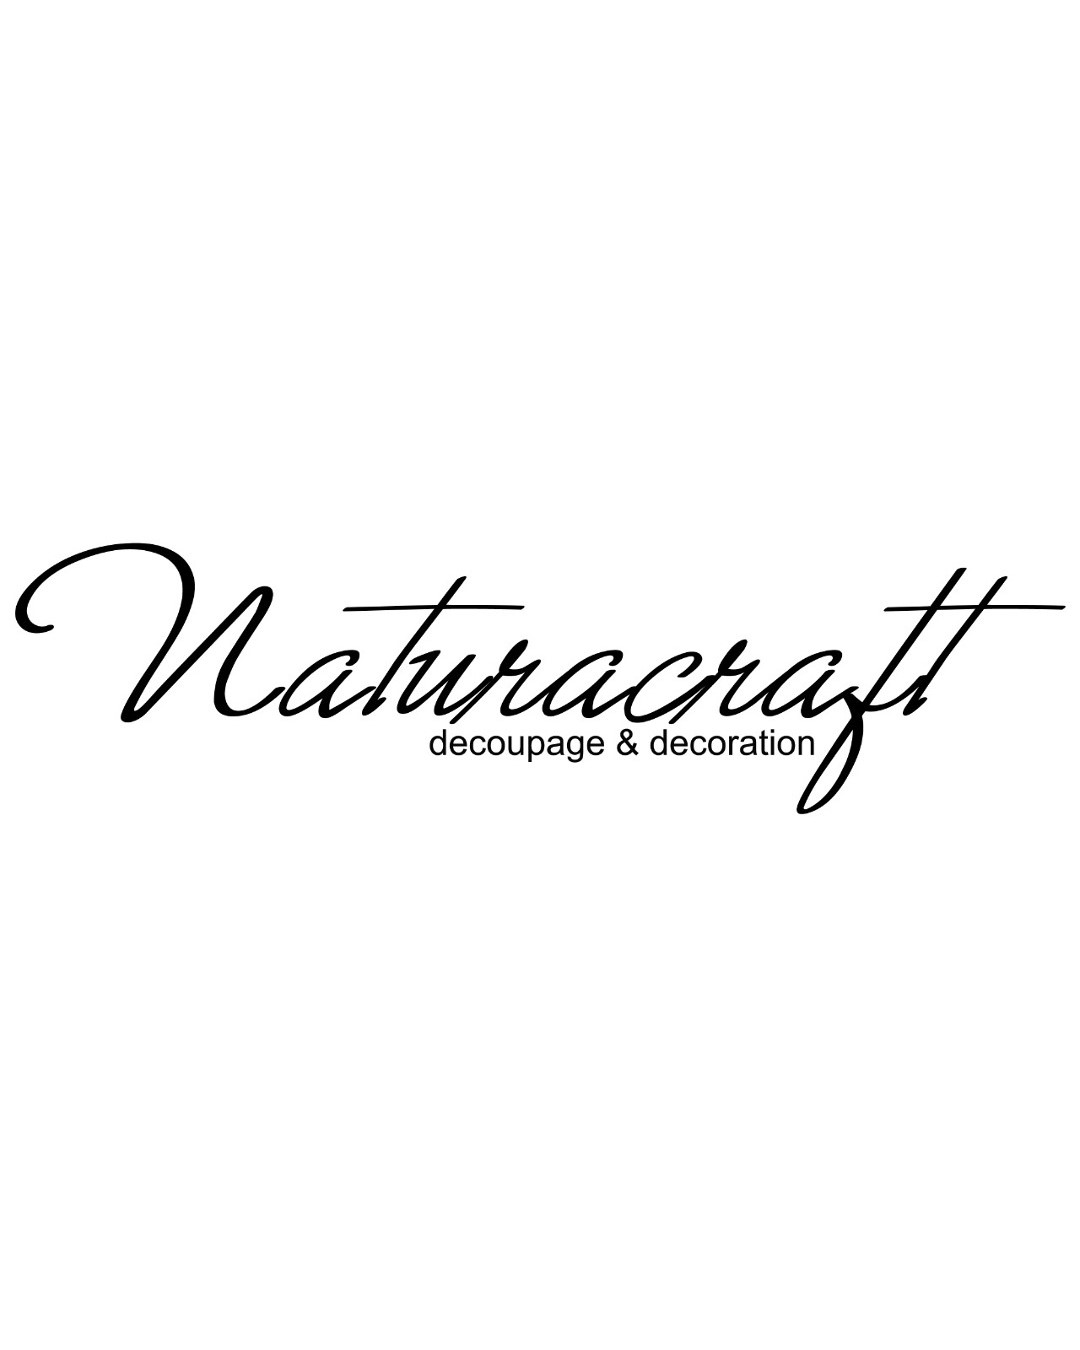 Naturacraft